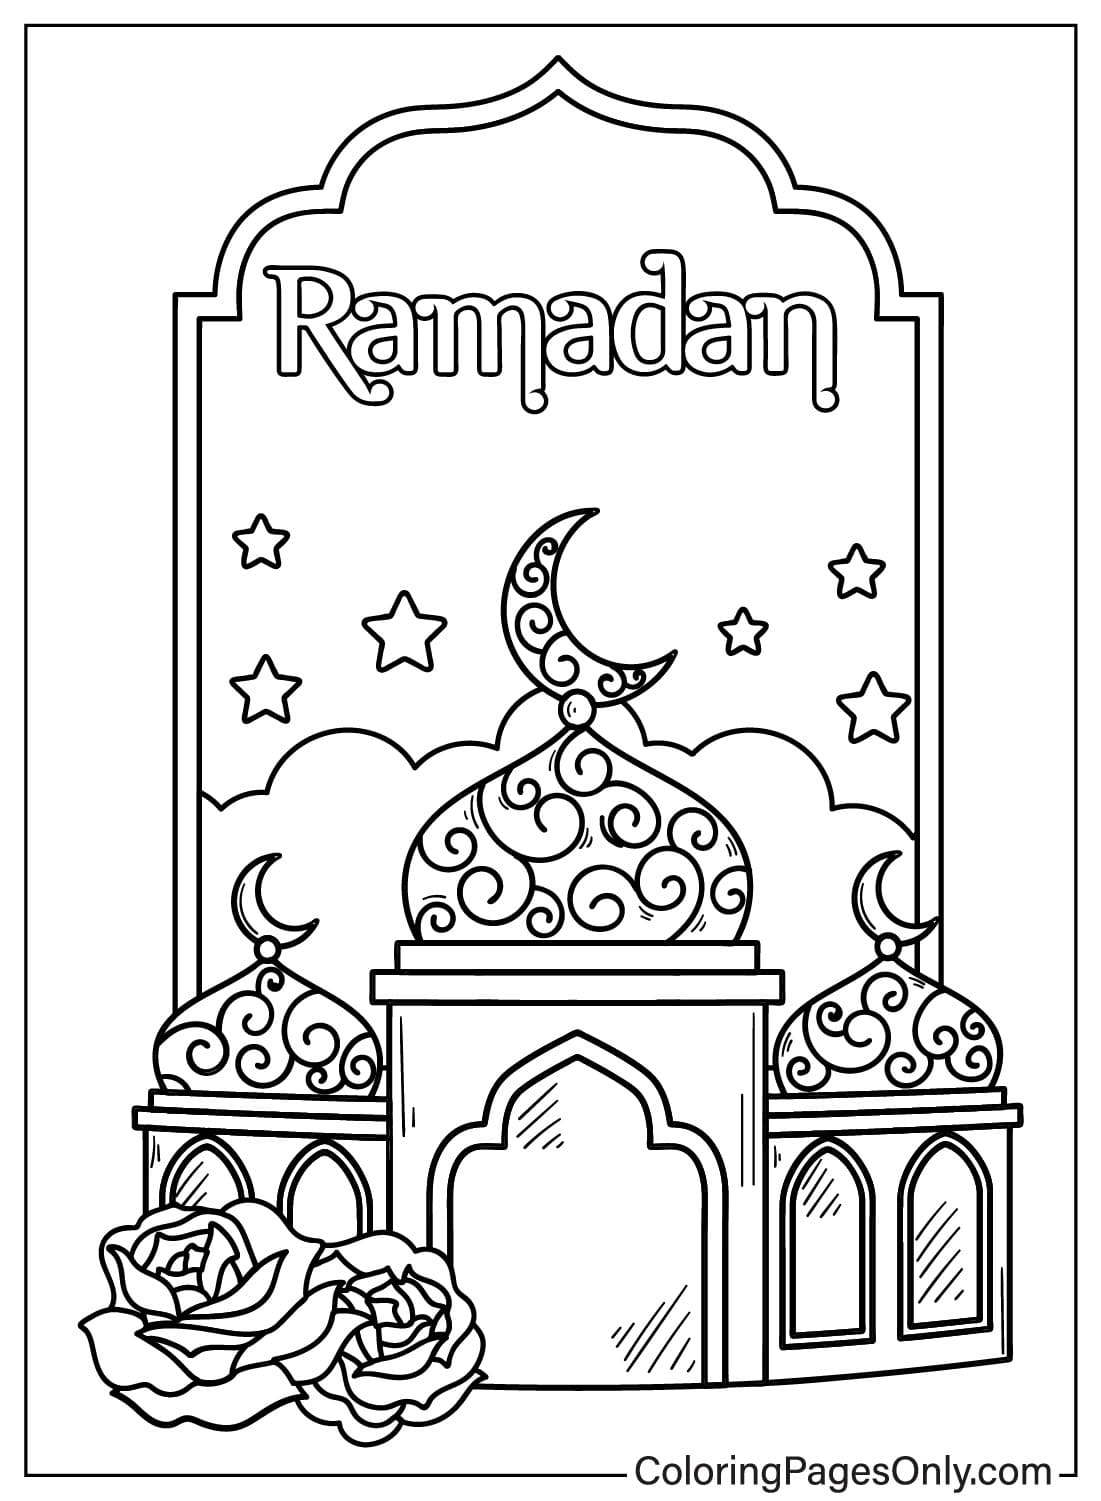 Ramadan Event Coloring Page from Ramadan